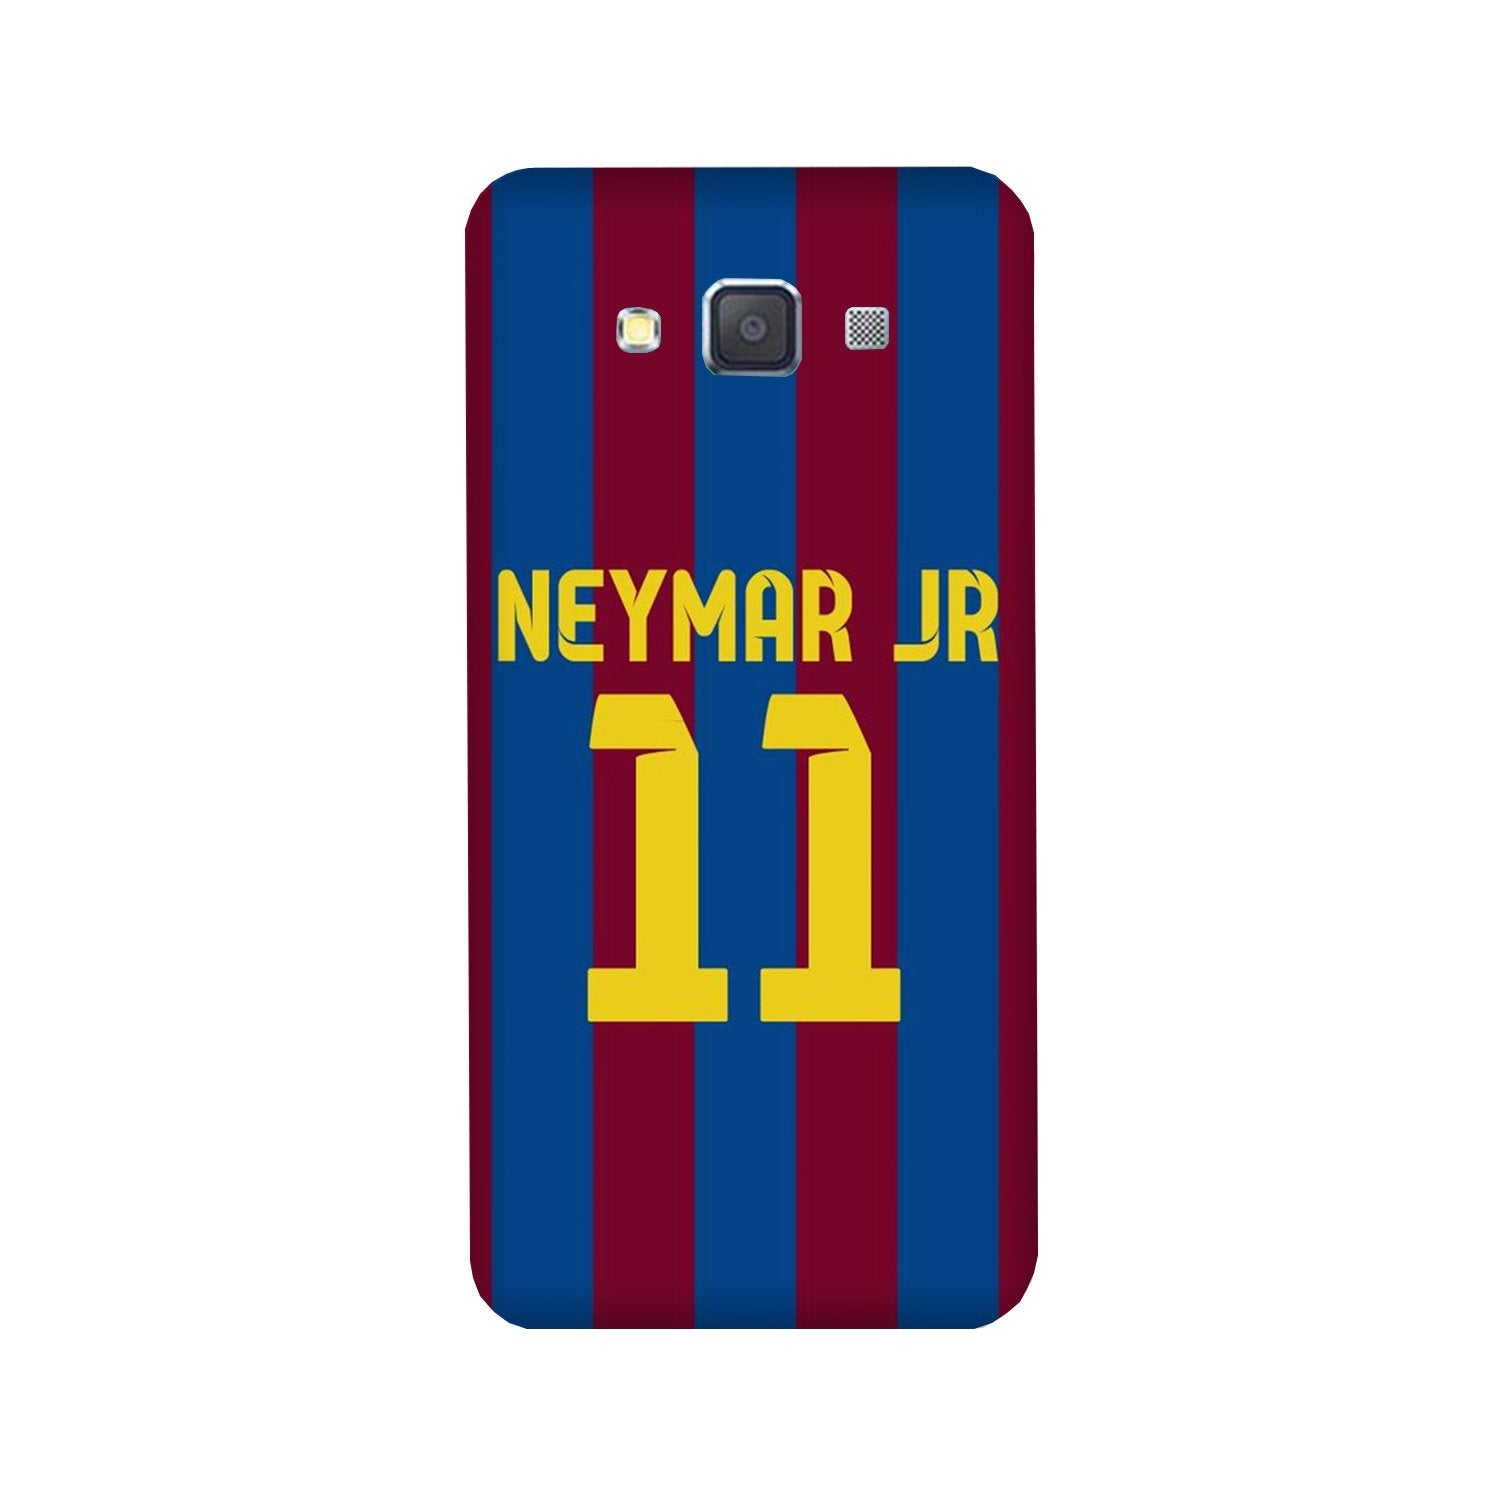 Neymar Jr Case for Galaxy ON7/ON7 Pro  (Design - 162)